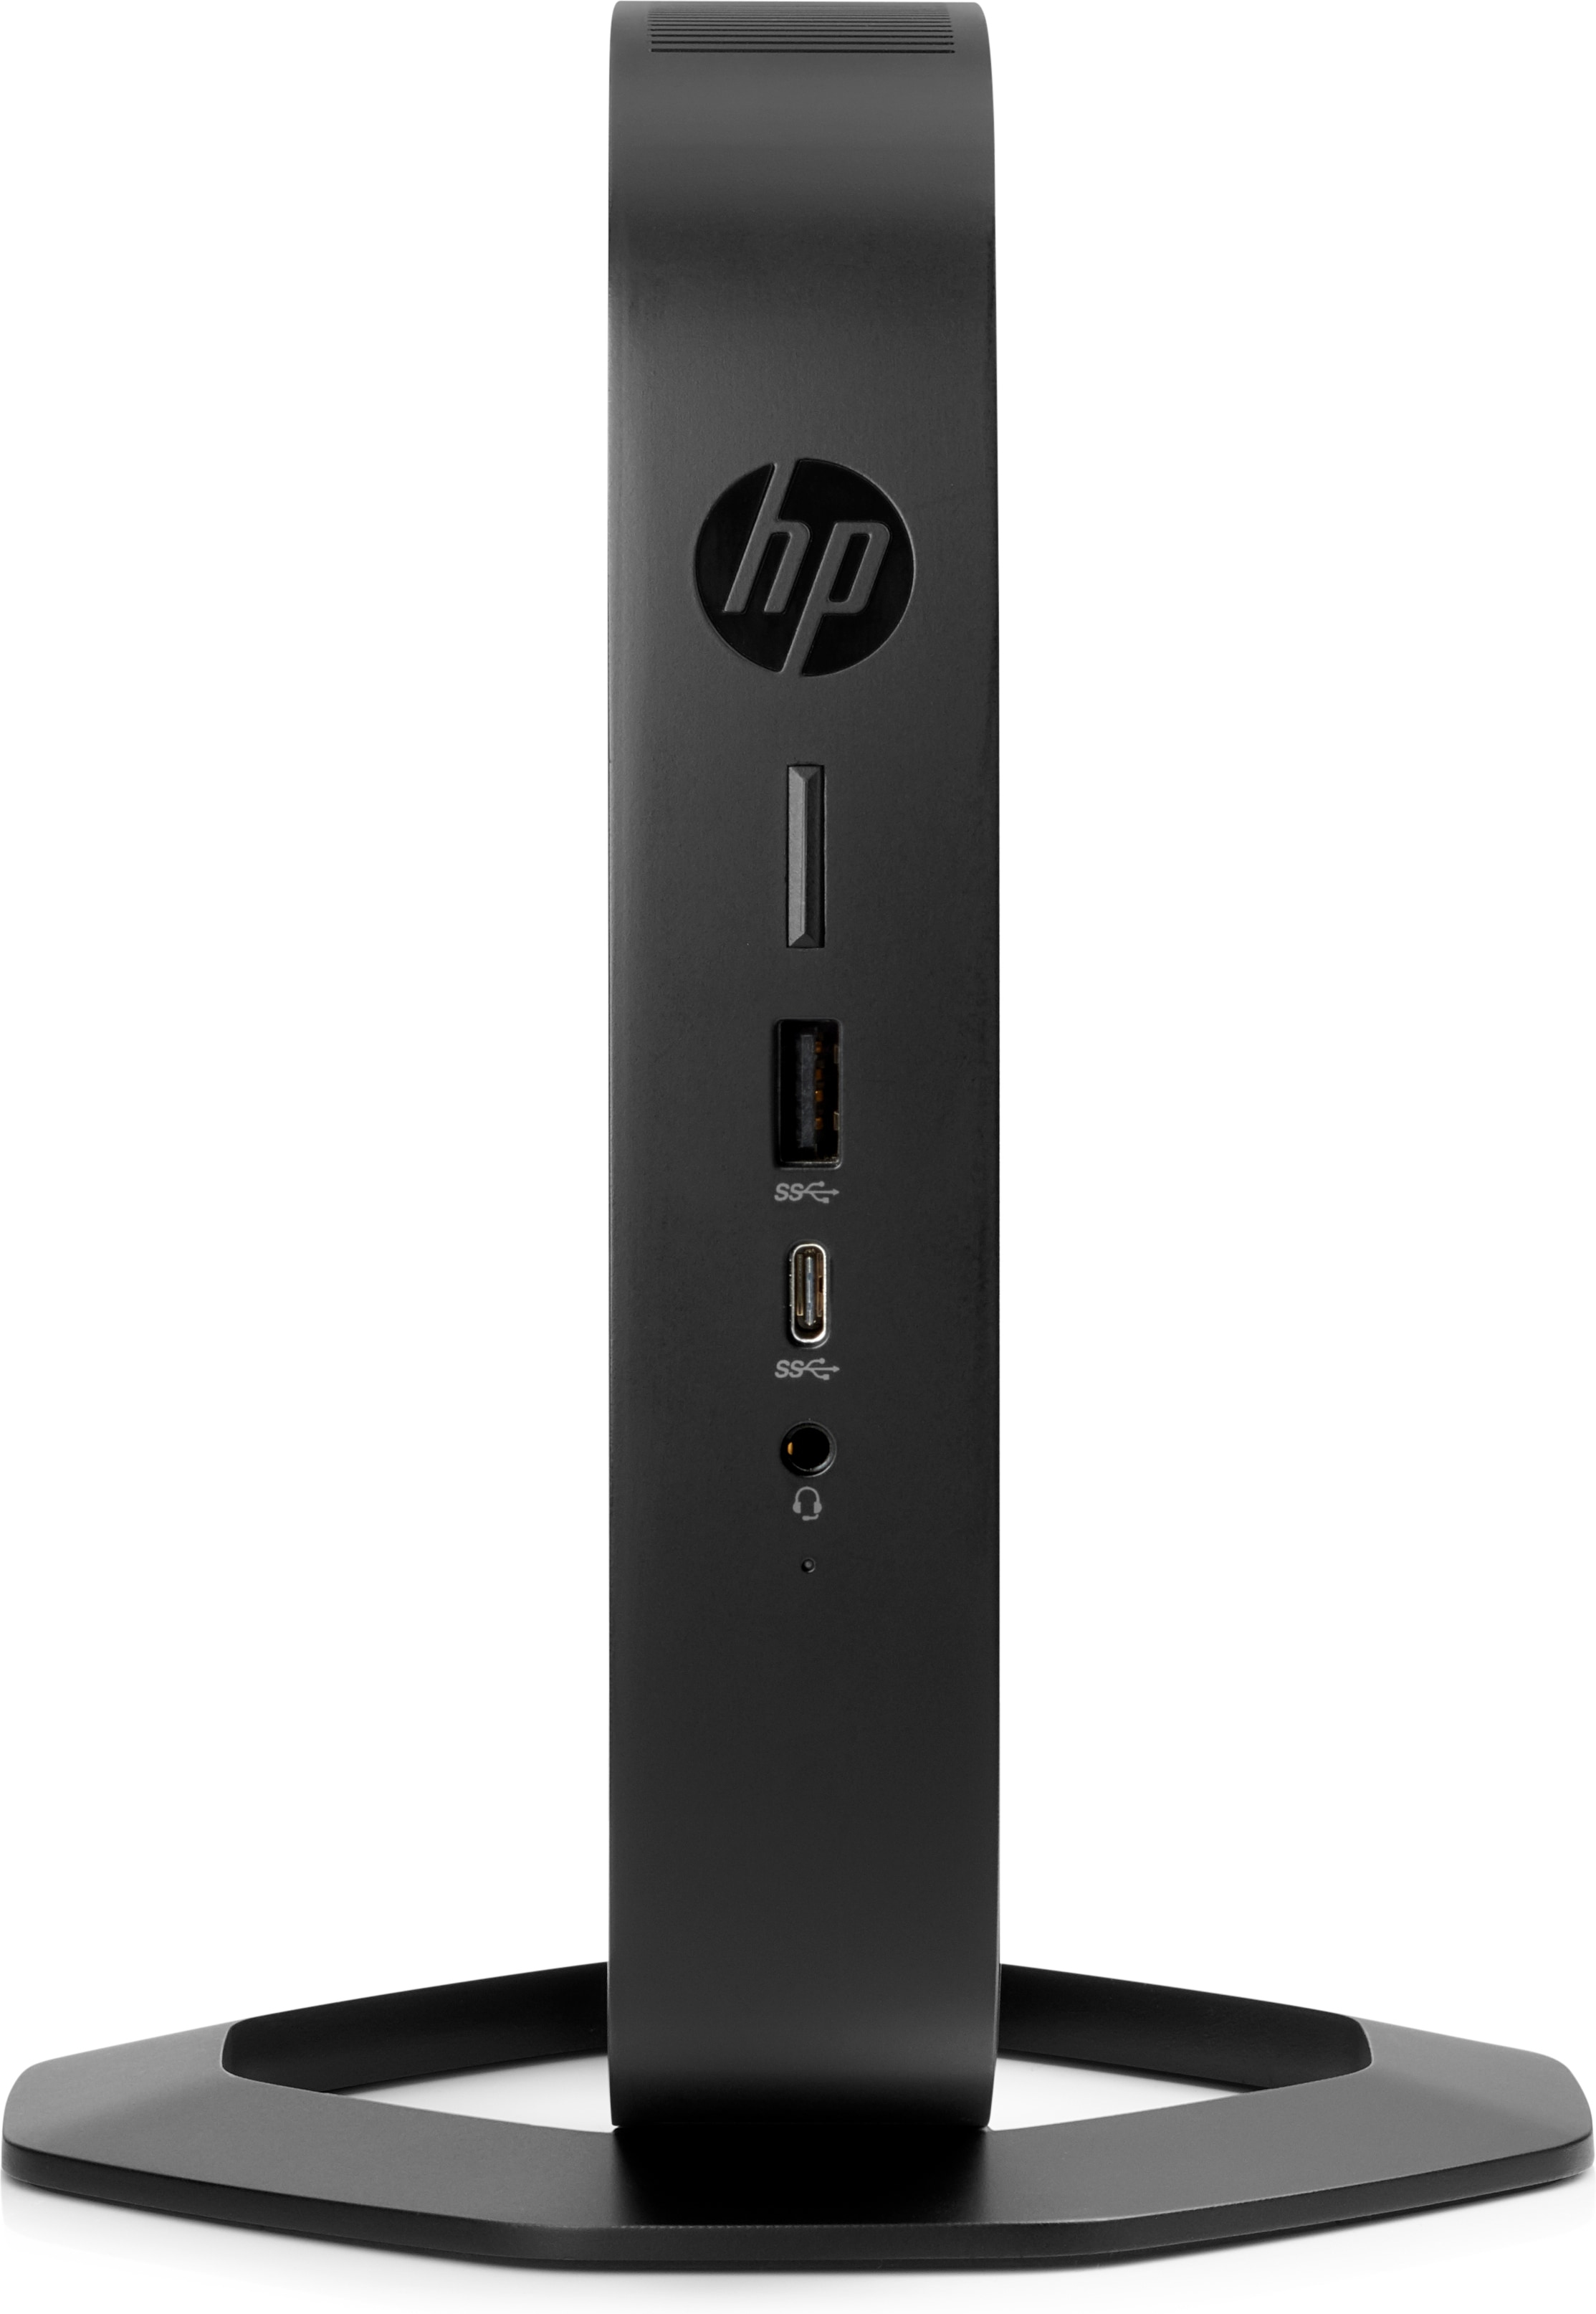 HP t540 - Thin client - USFF - 1 x Ryzen Embedded R1305G / 1.5 GHz - RAM 4 GB - flash 16 GB - Radeon Vega 3 - GigE - HP ThinPro - monitor: none - keyboard: US